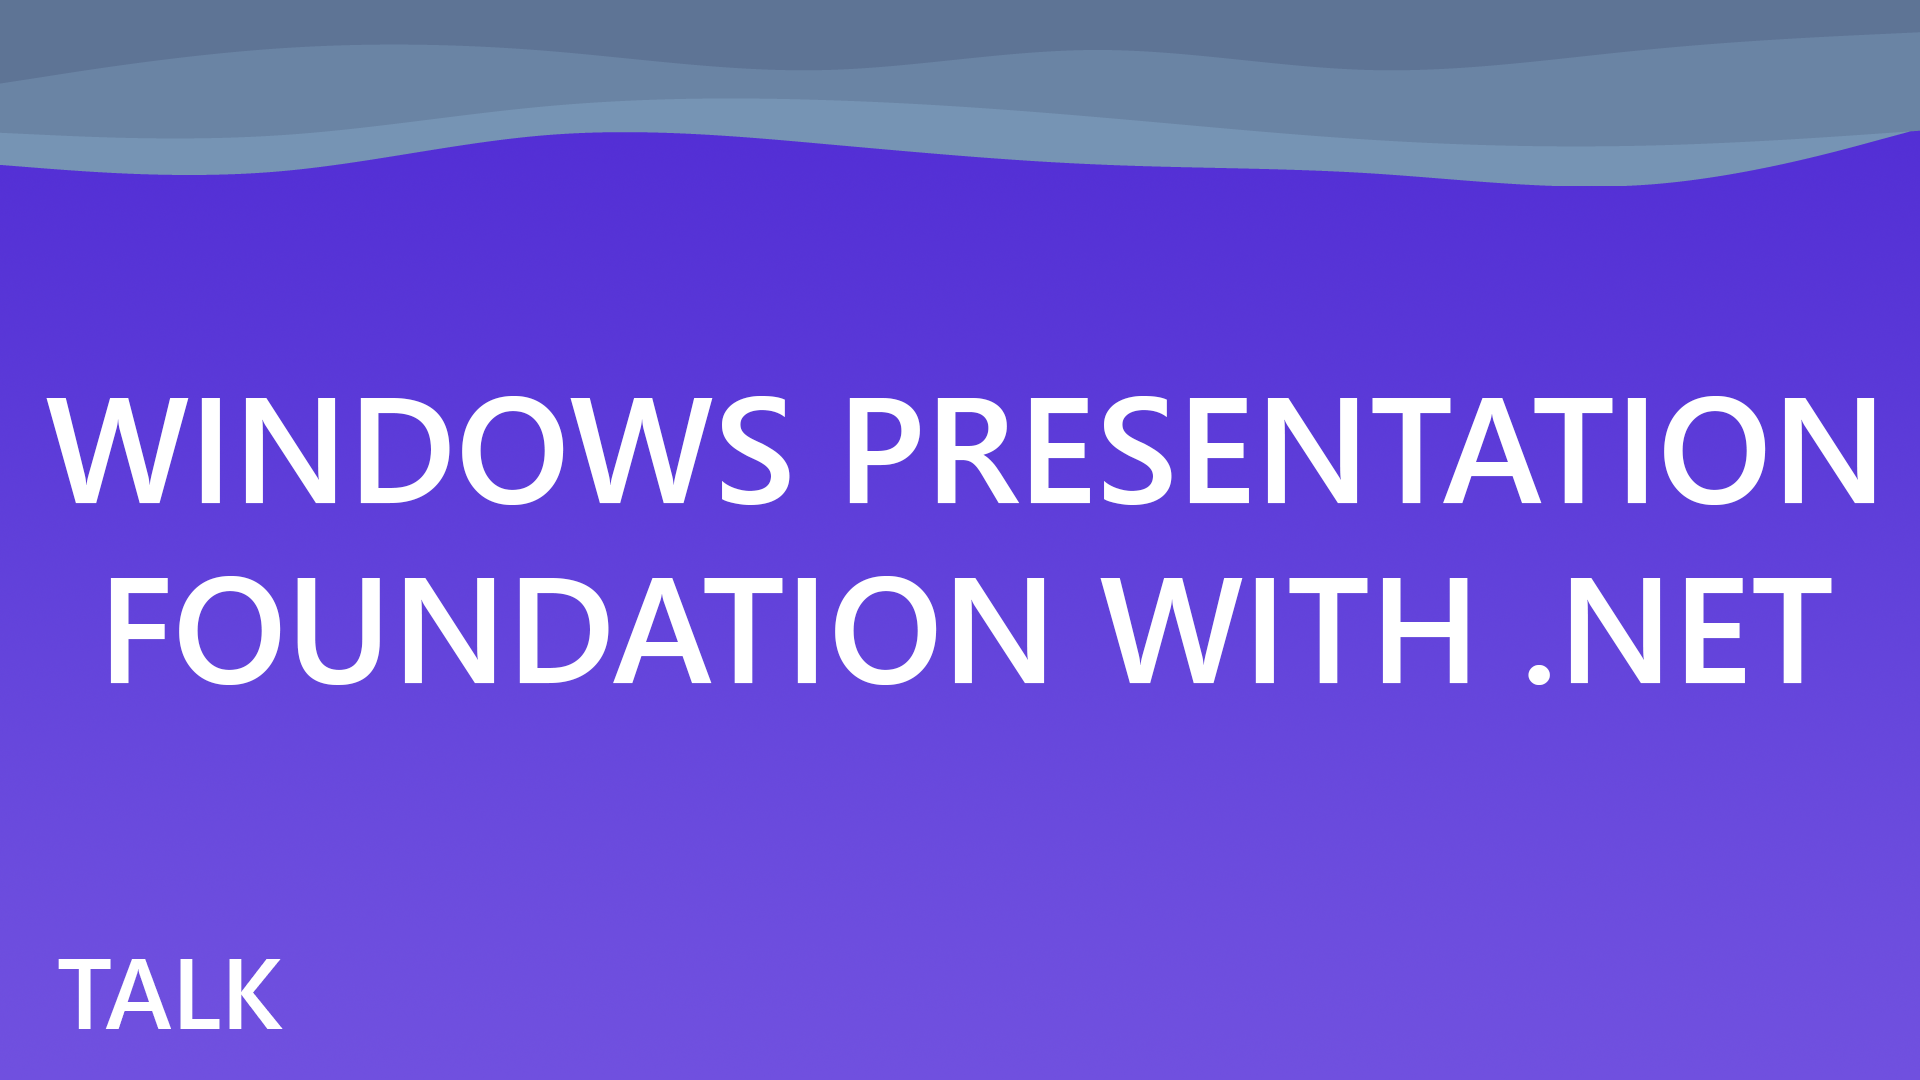 Windows Presentation Foundation with .NET